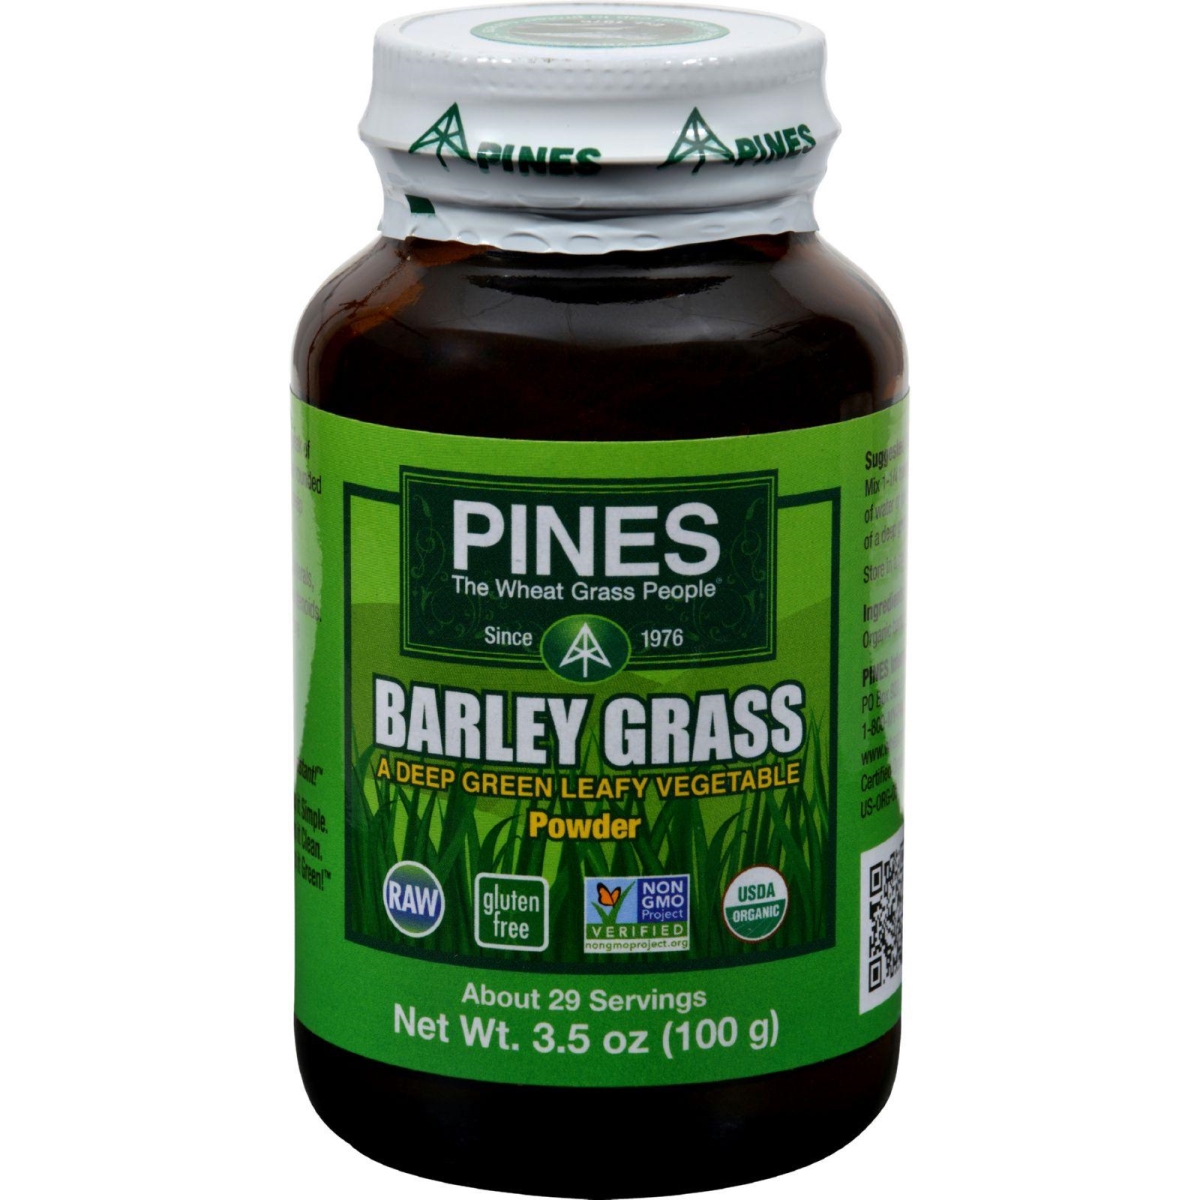 Hg0761502 3.5 Oz 100 Percent Organic Barley Grass Powder